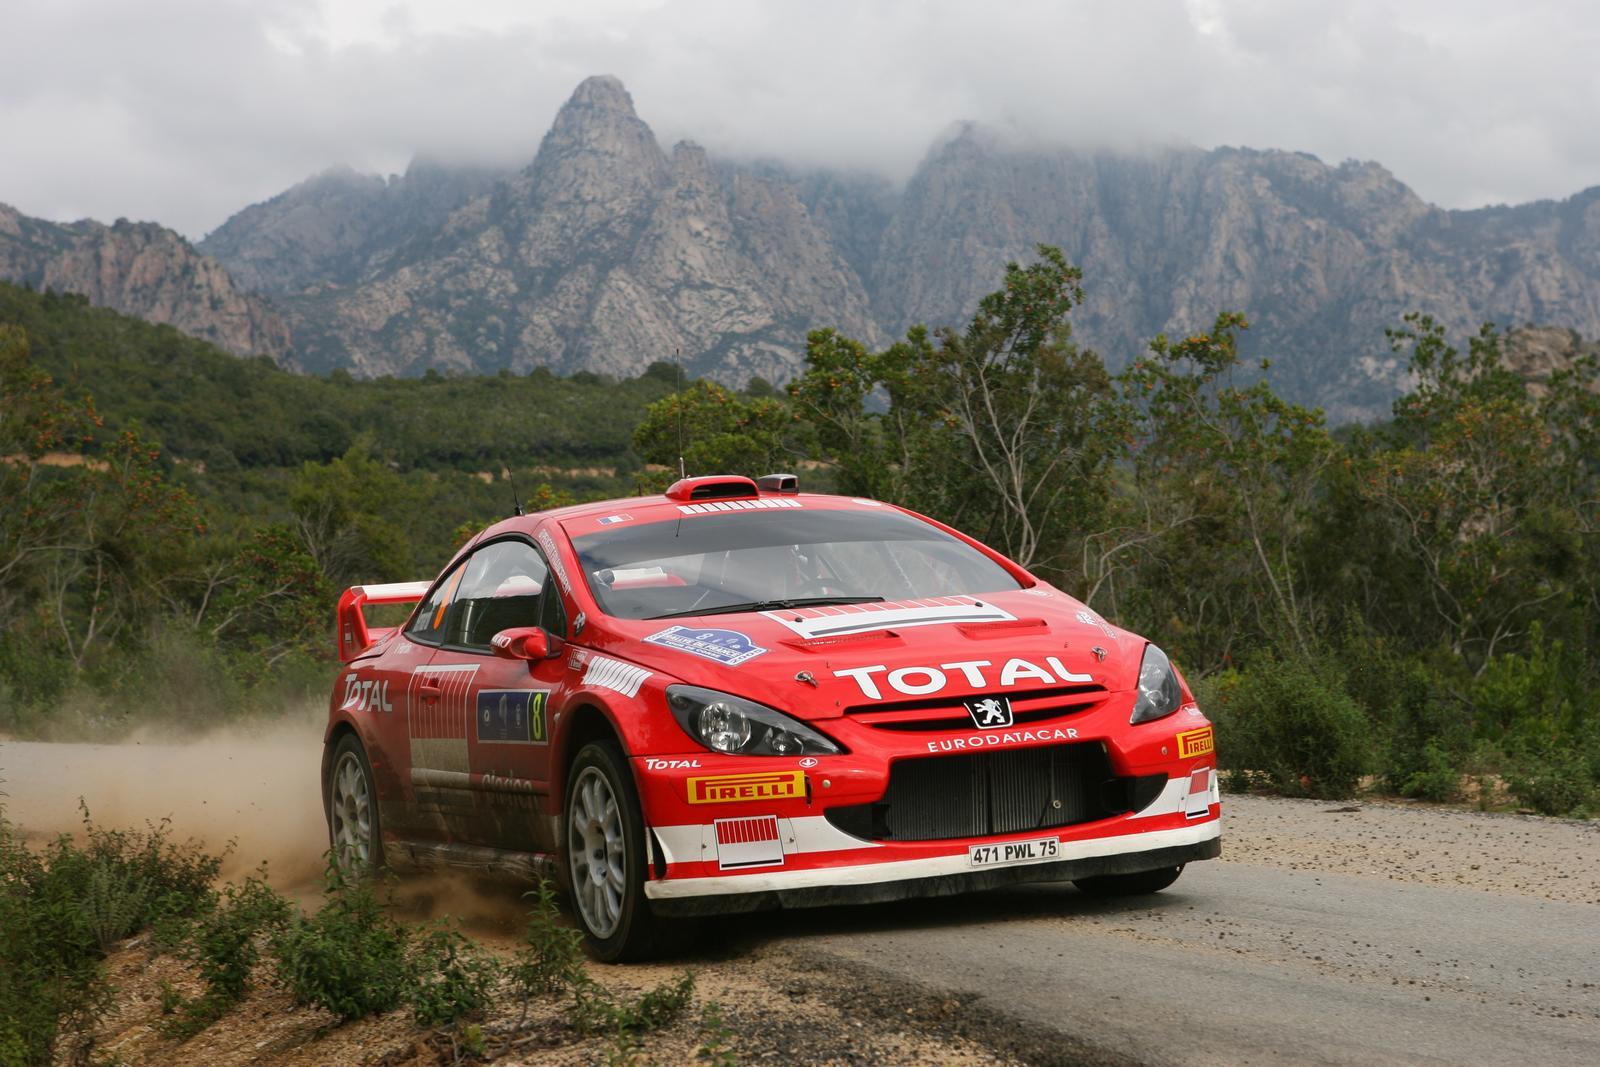 Peugeot 307 WRC picture. Peugeot photo gallery